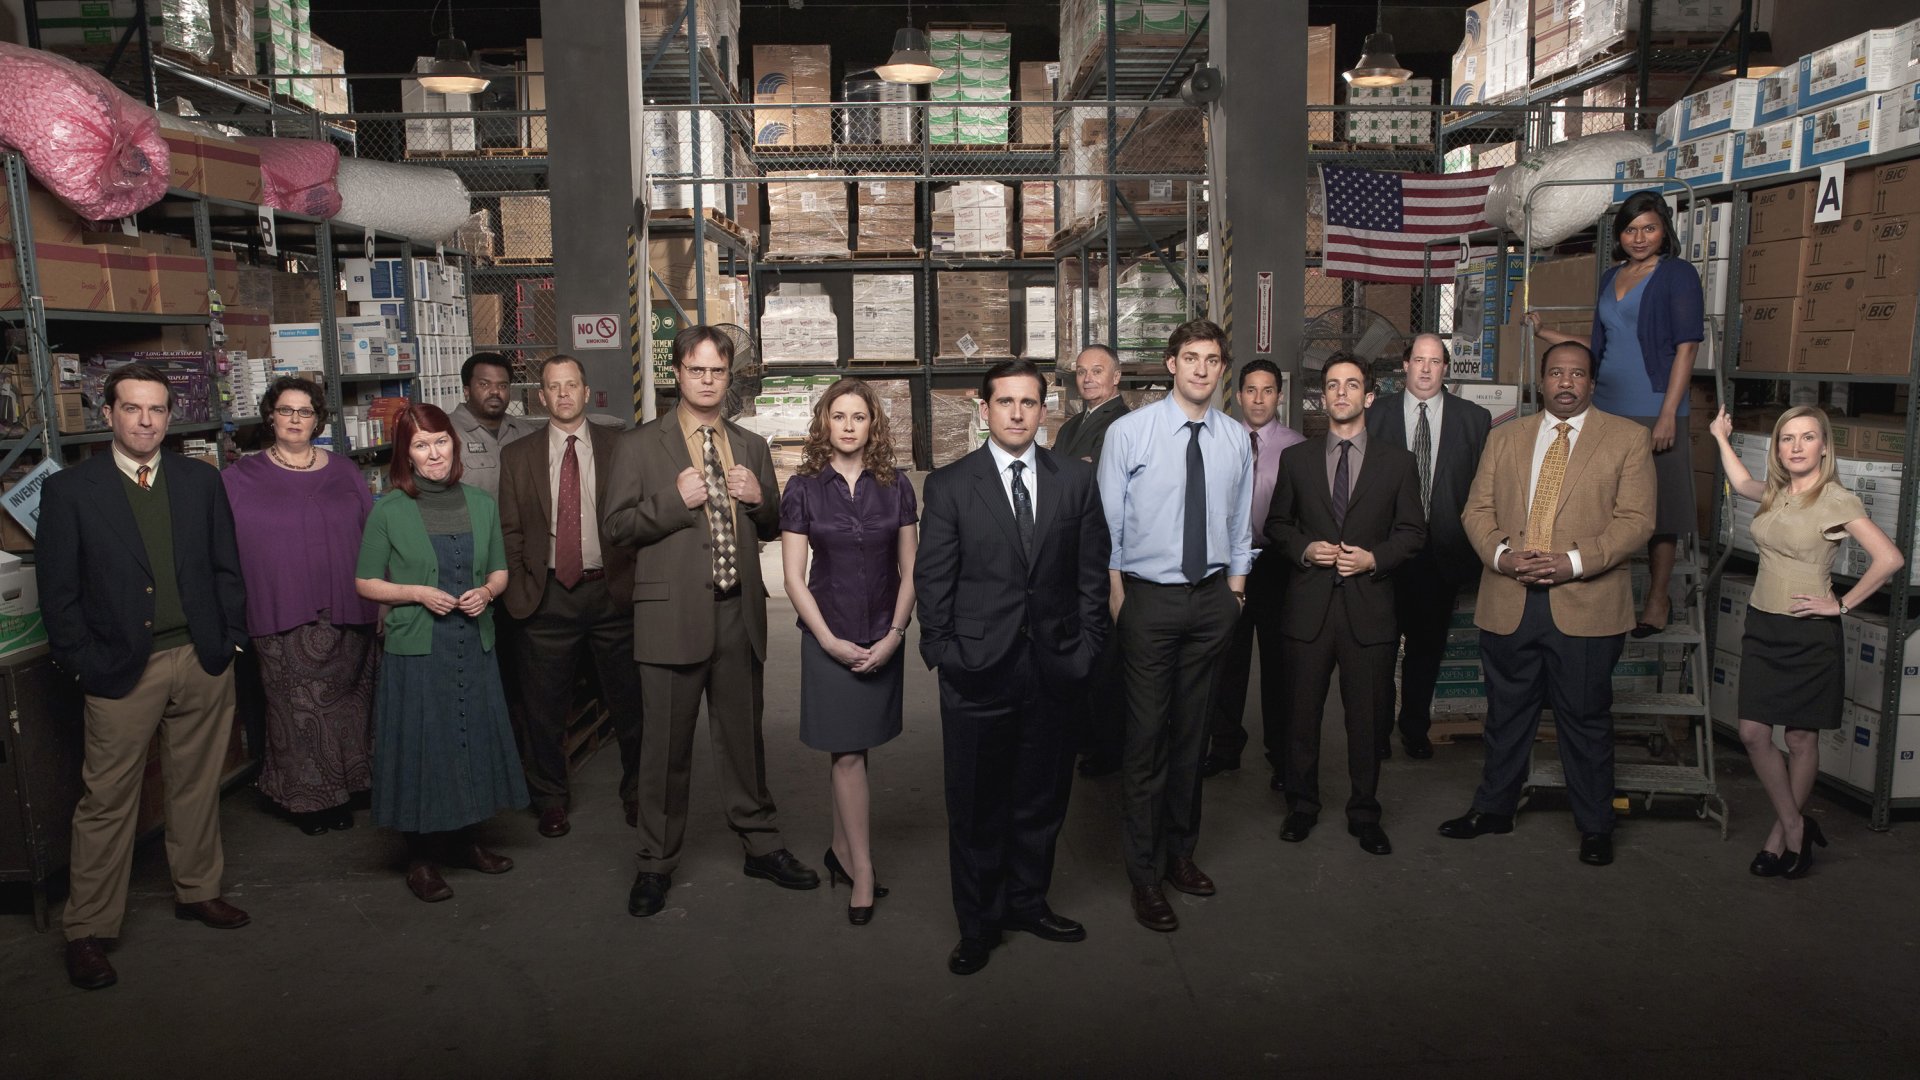 Watch The Office (US) Season 5 Episode 20 Online - Stream Full Episodes